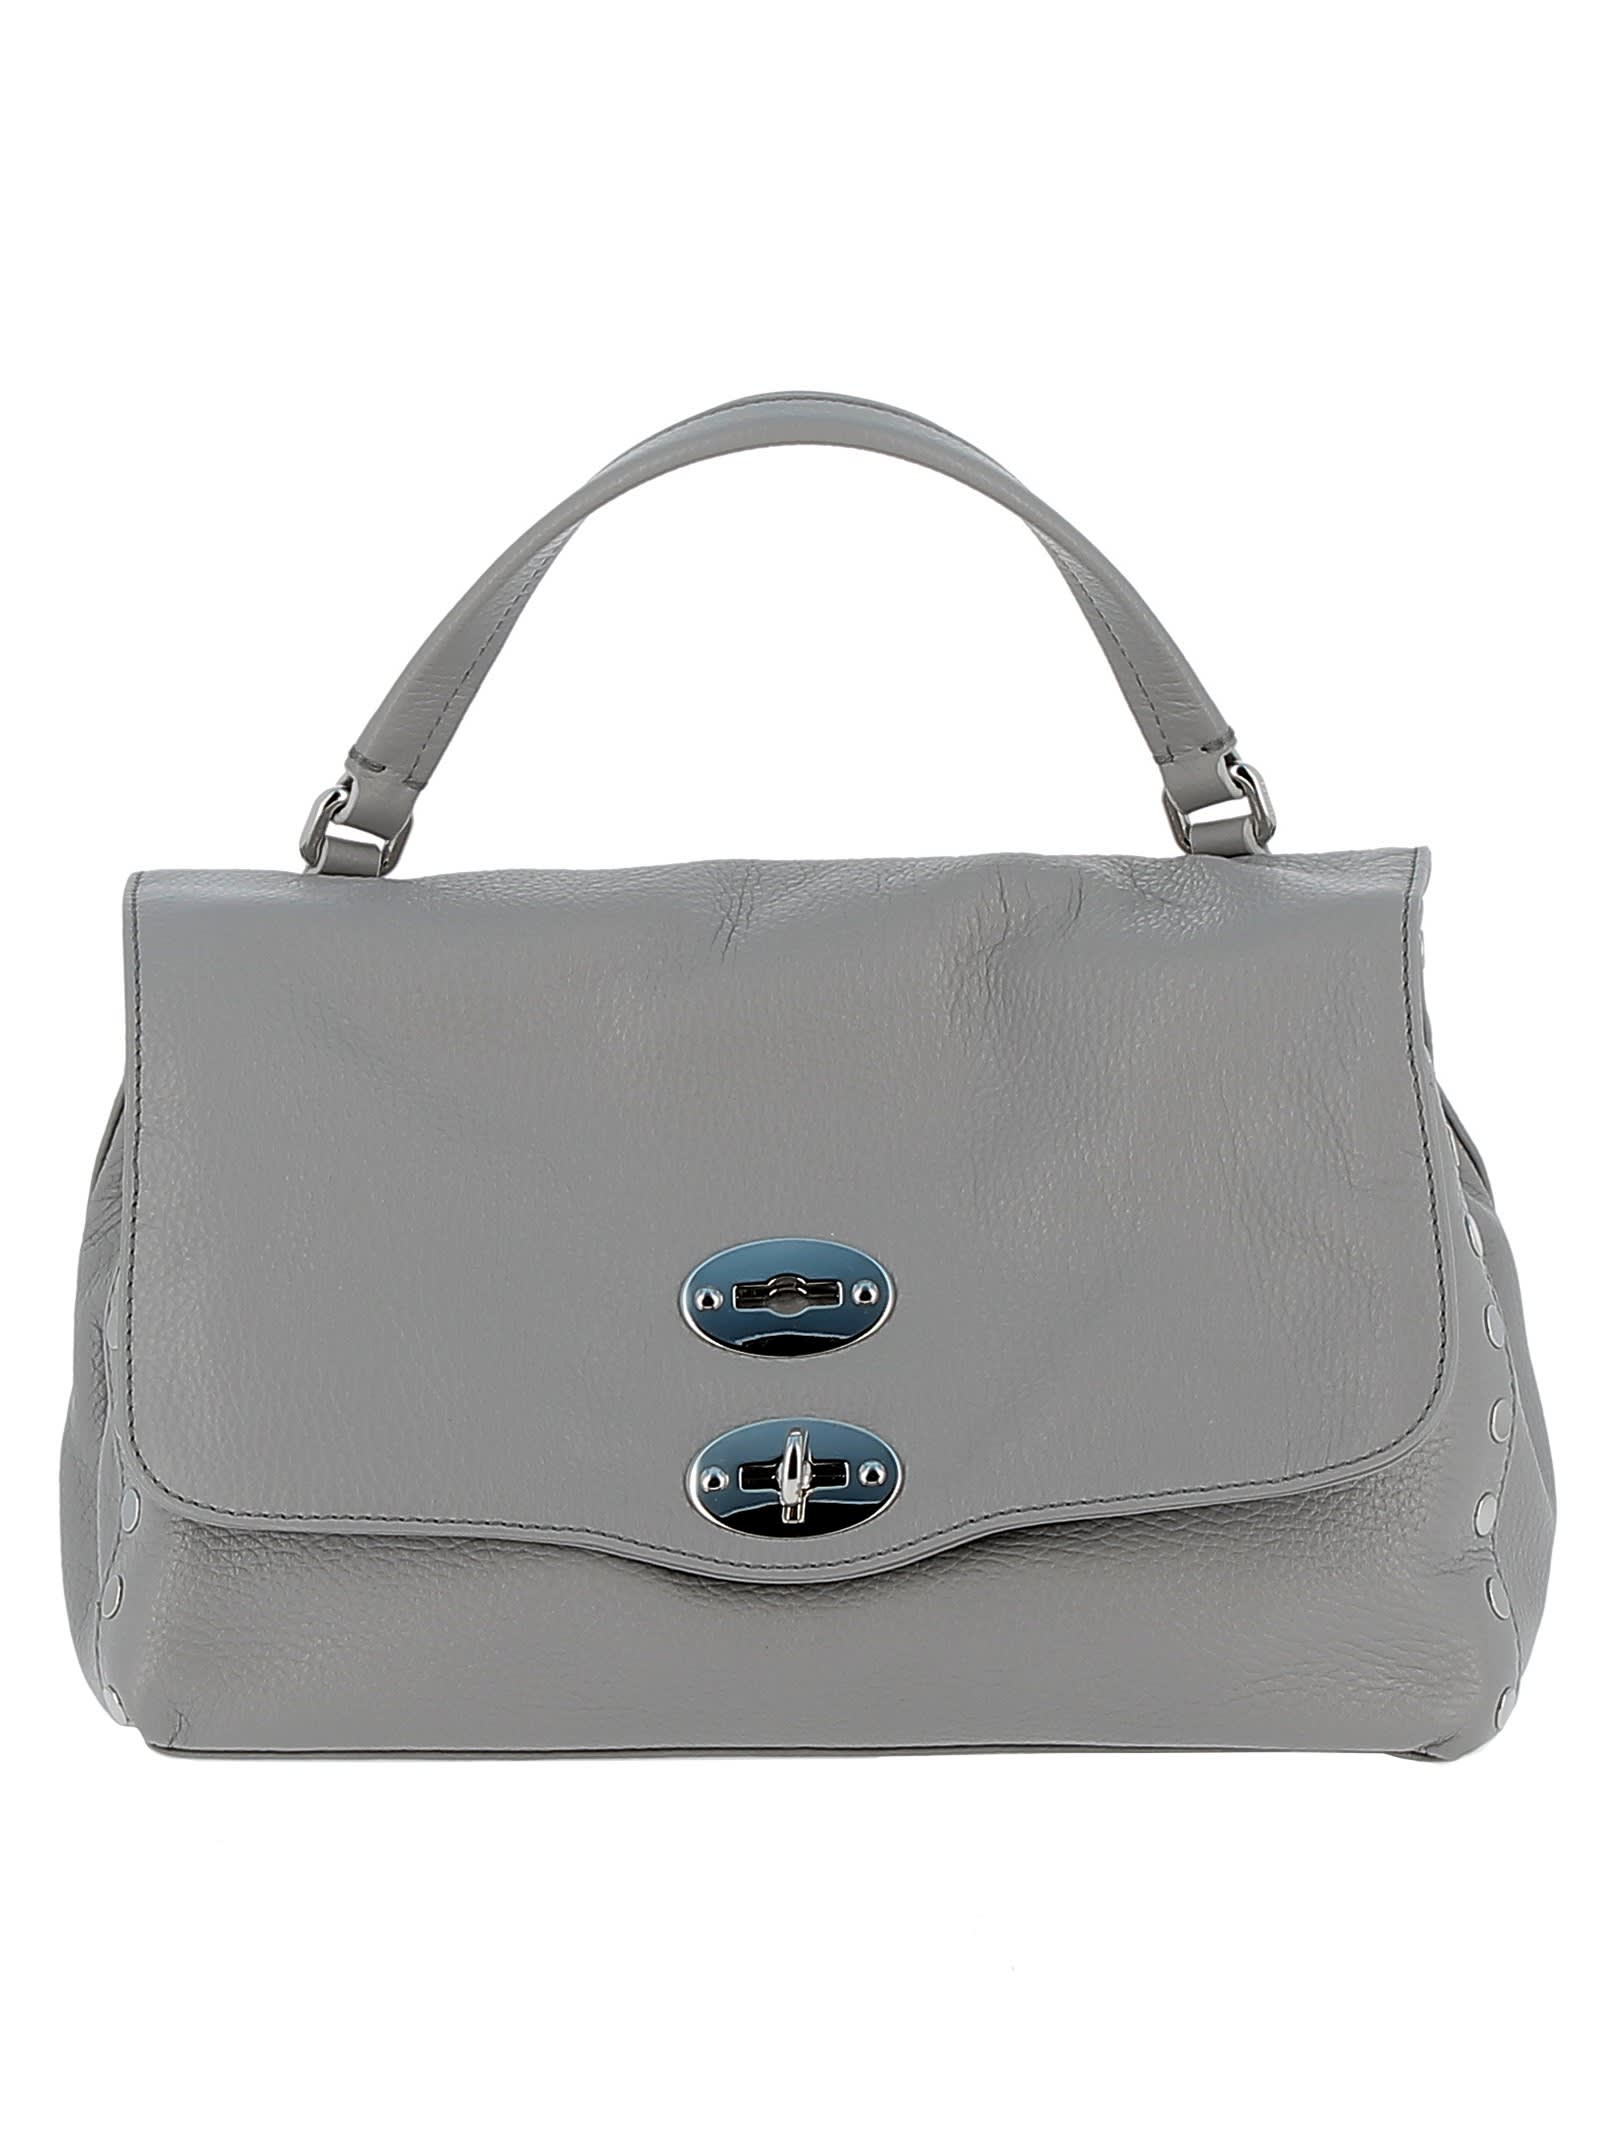 Zanellato Perla Leather Handbag